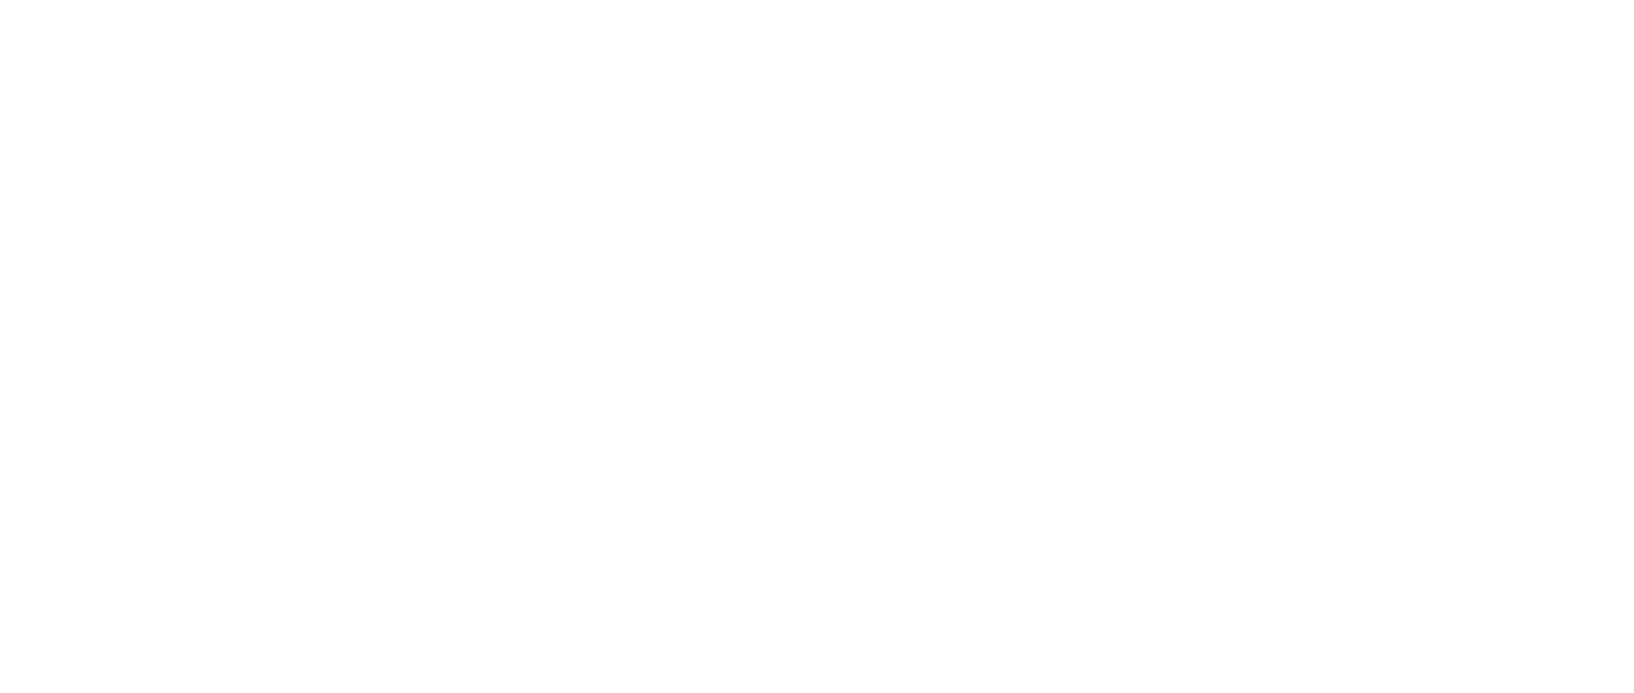 Milano Verticale UNA Esperienze